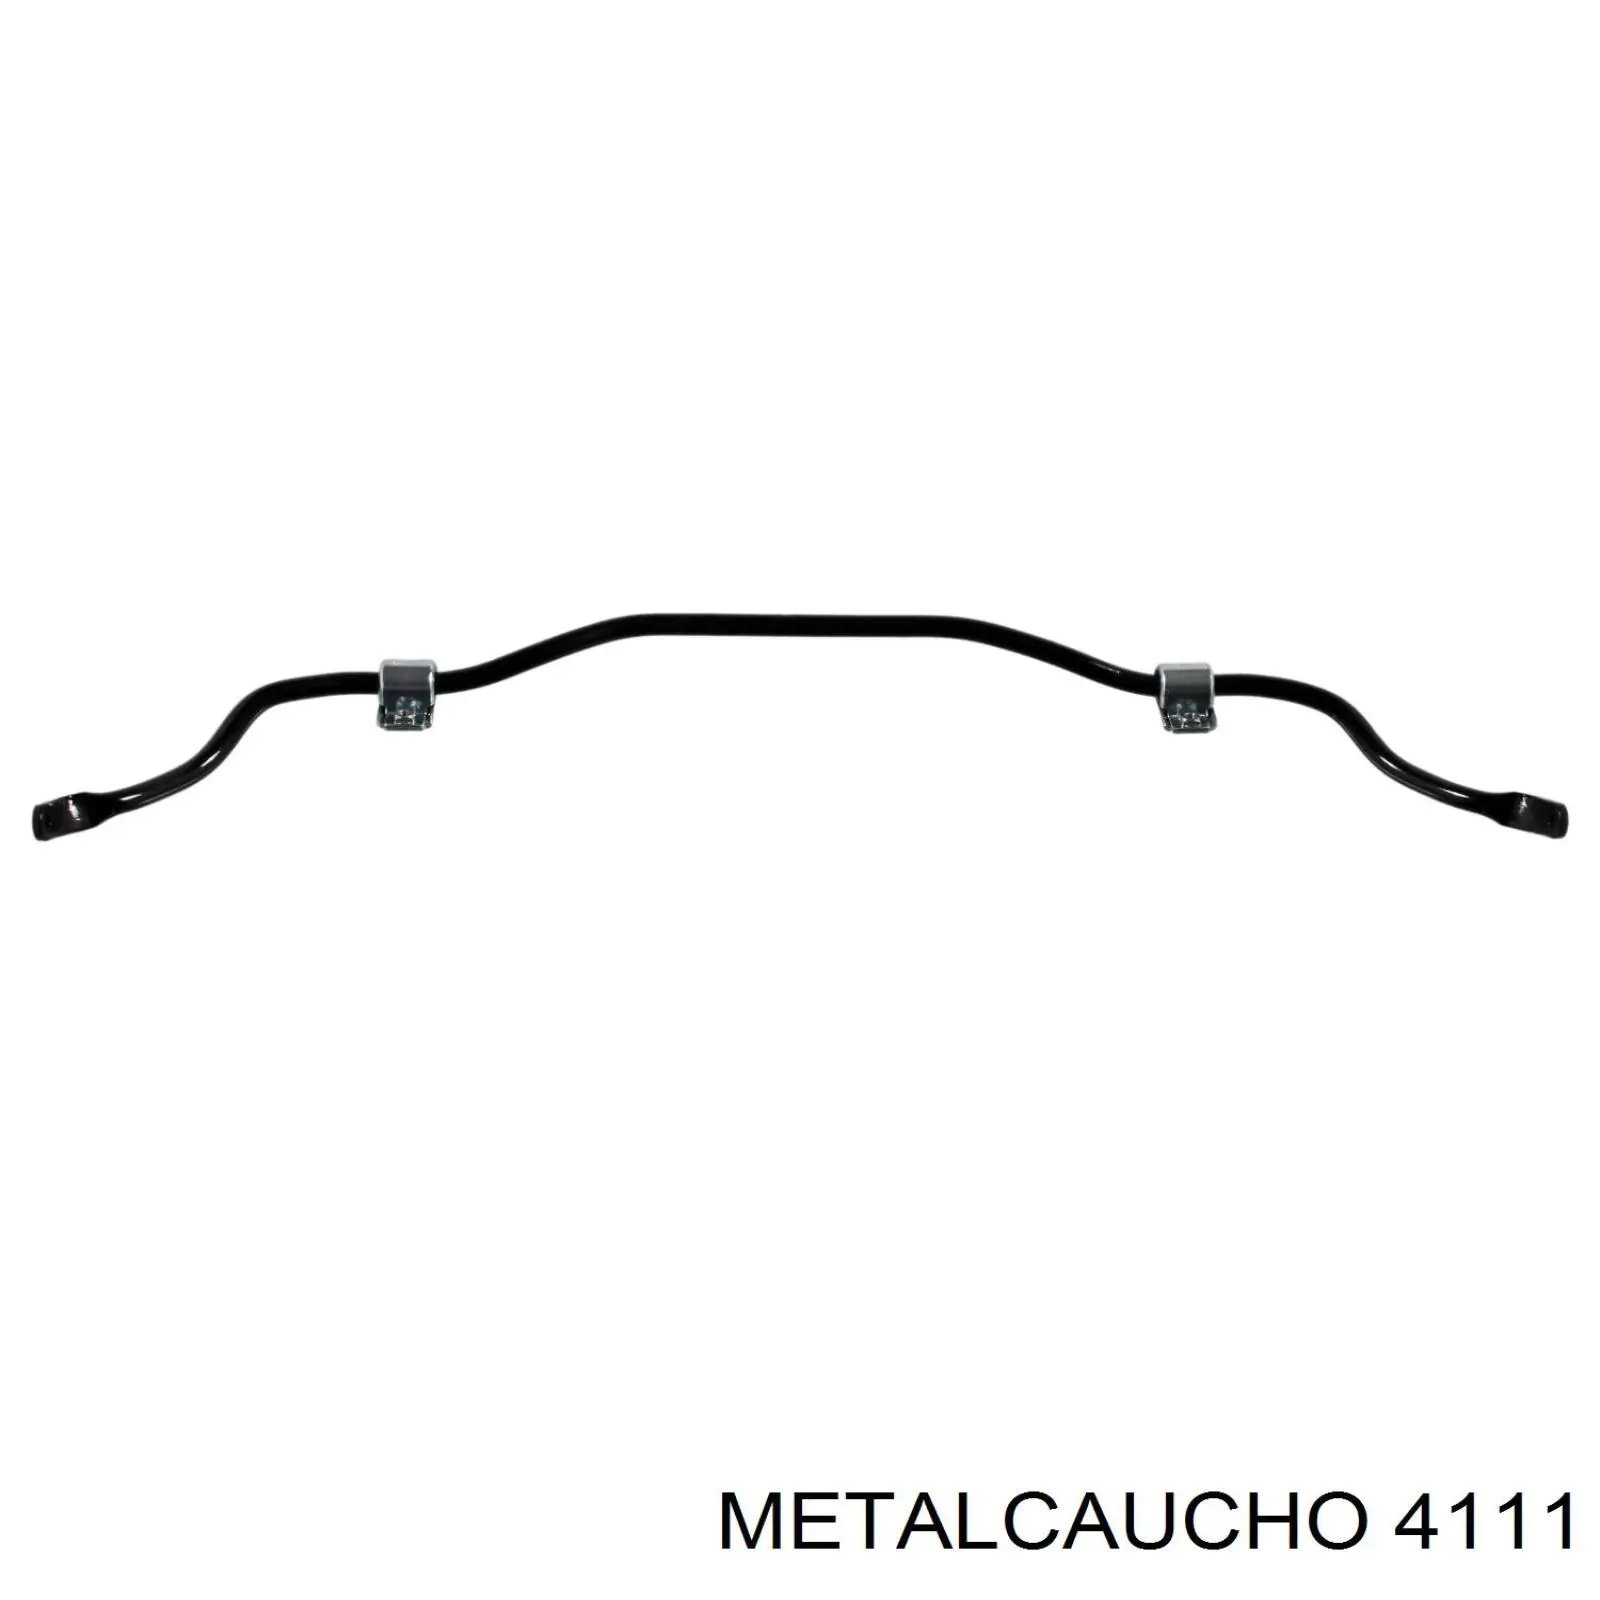 4111 Metalcaucho soporte amortiguador delantero